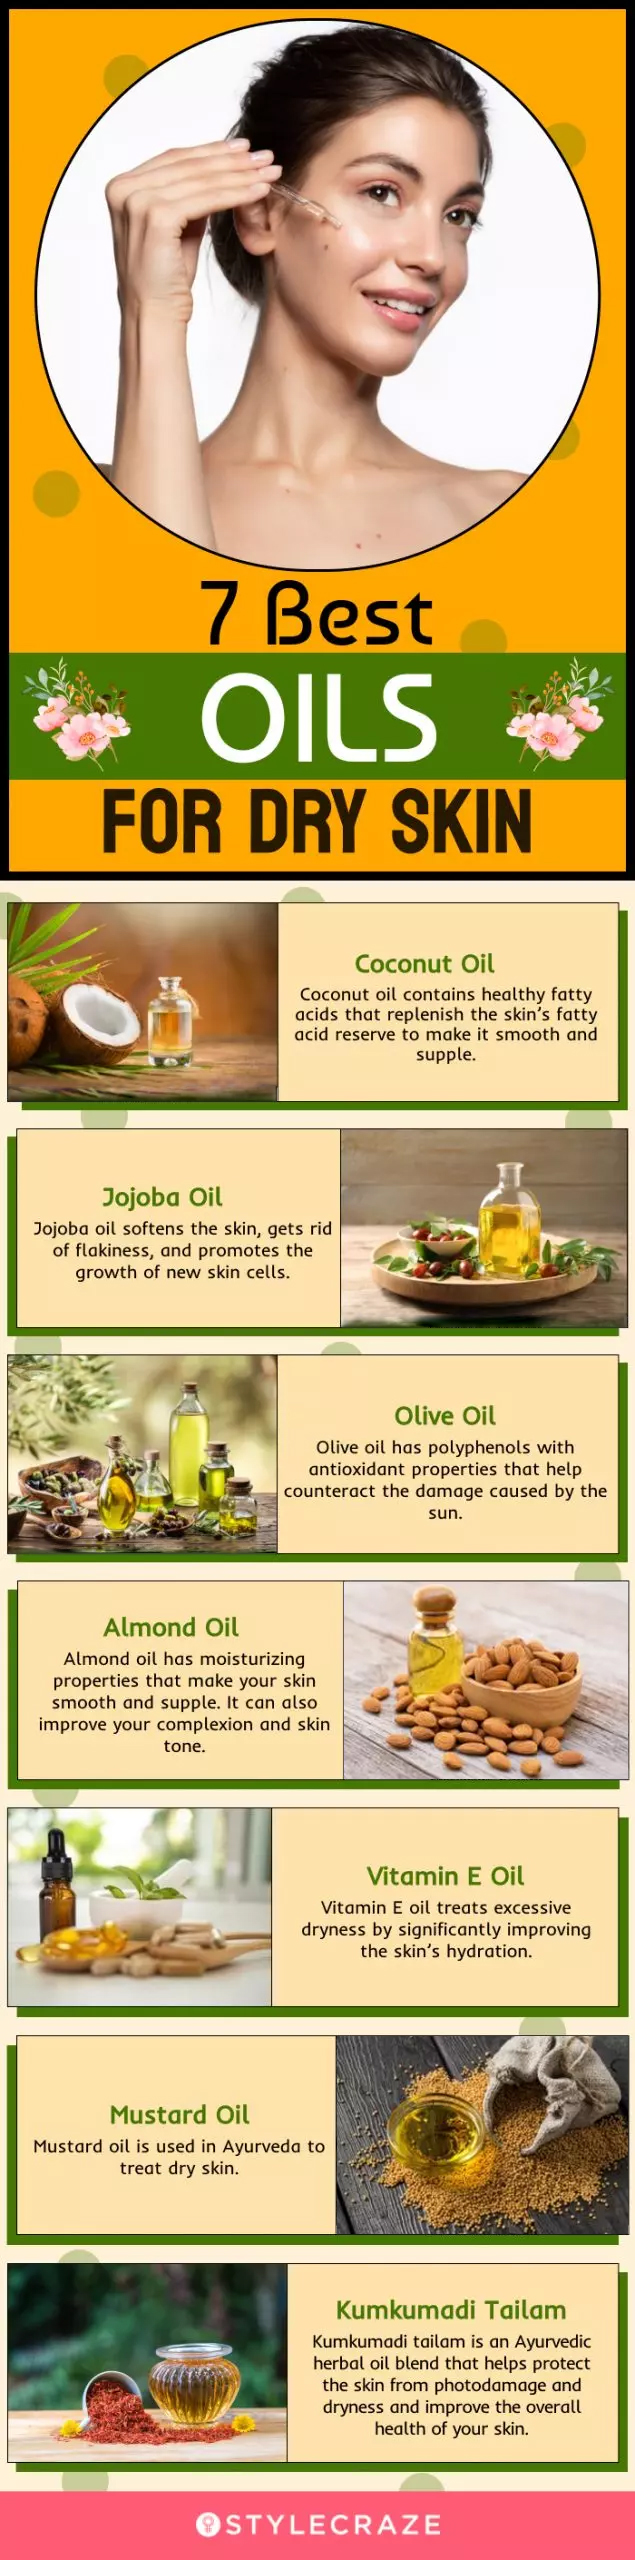 7 best oils for dry skin (infographic)